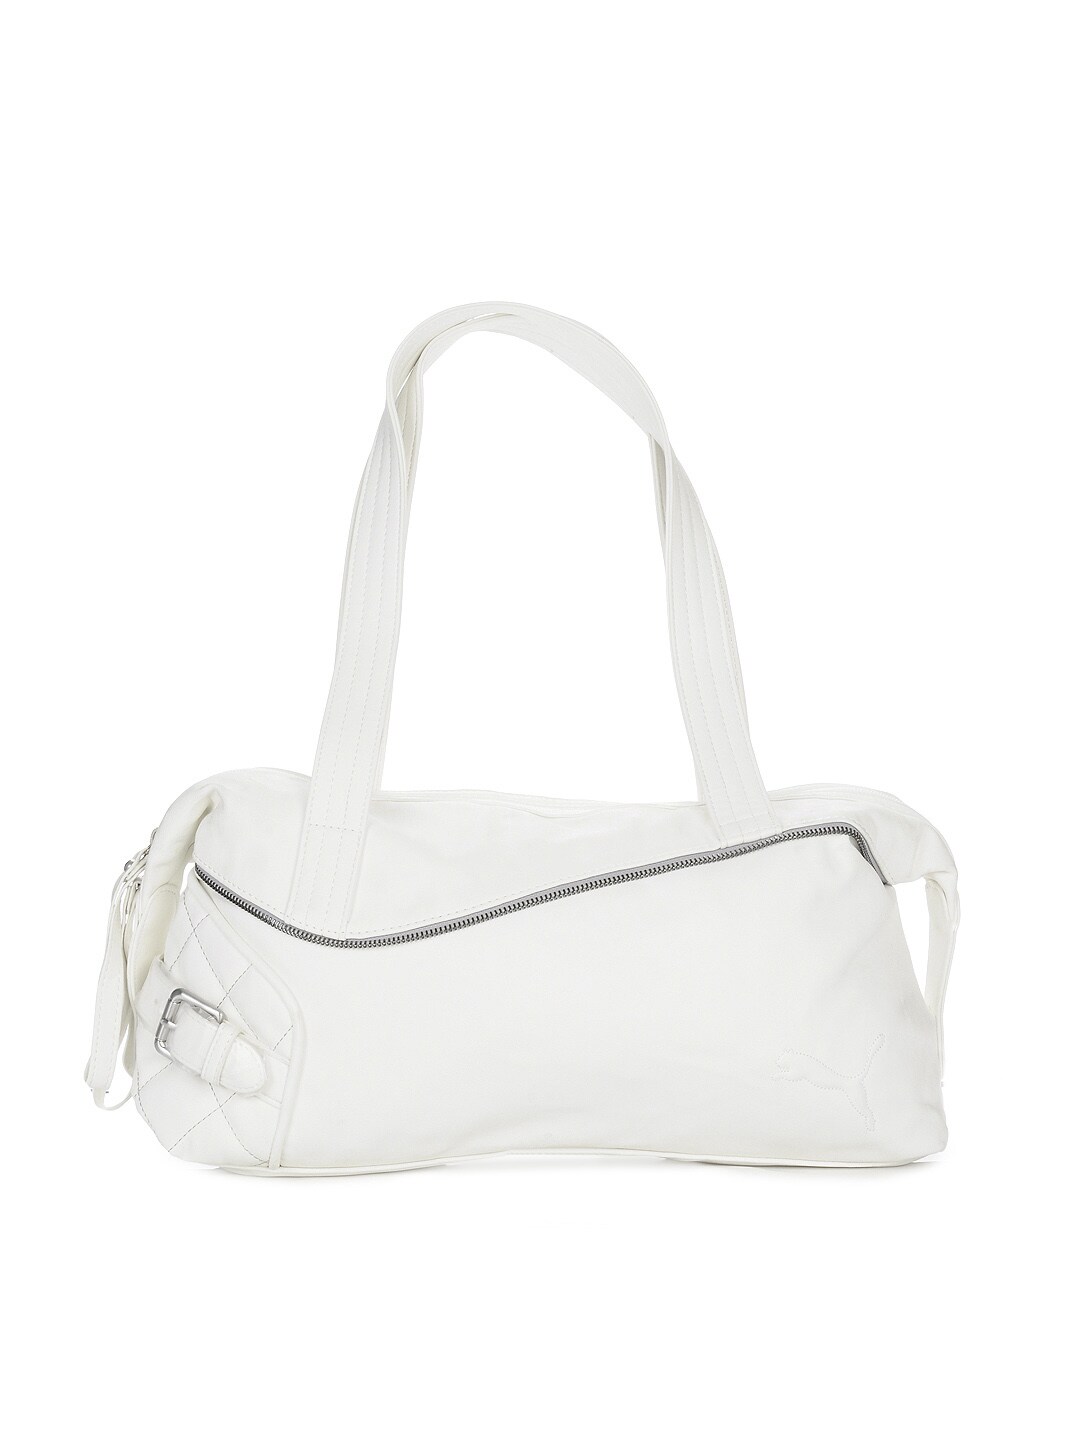 Puma Women White Handbag